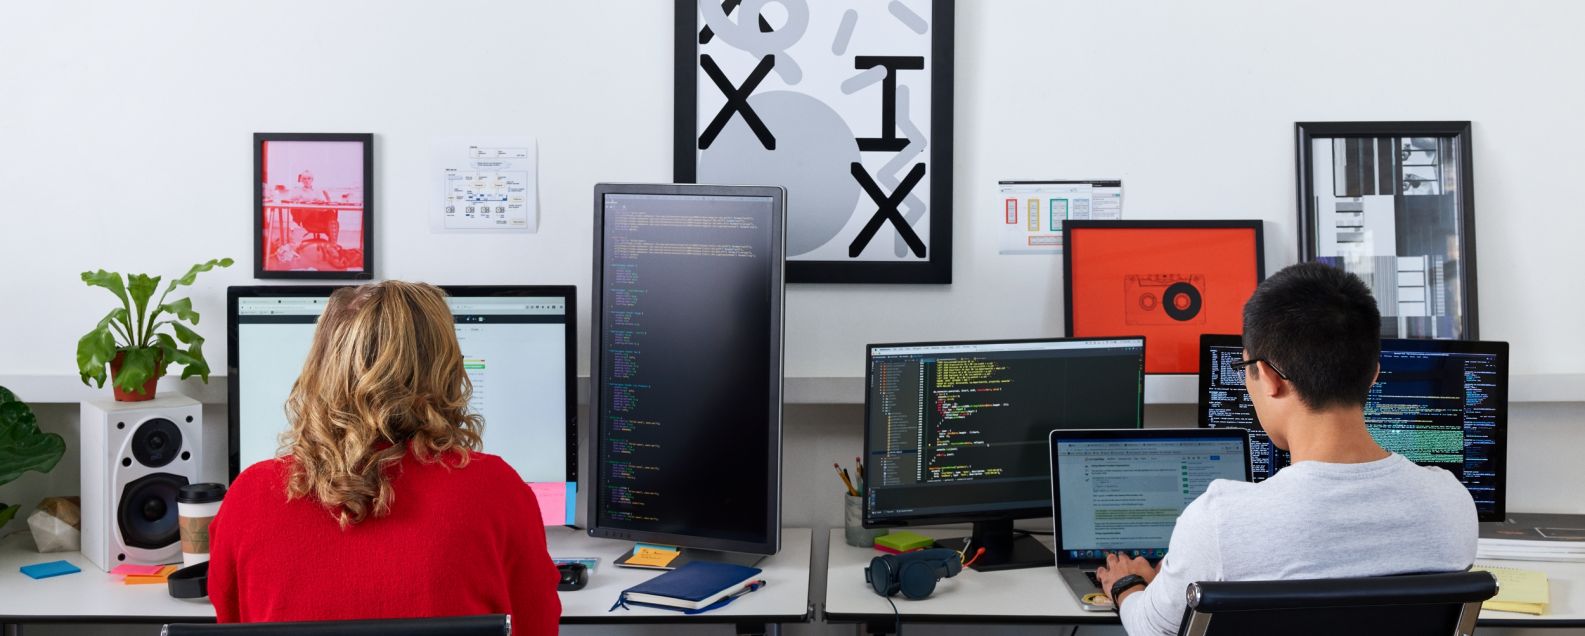 Back view of developer programming on multiple monitors